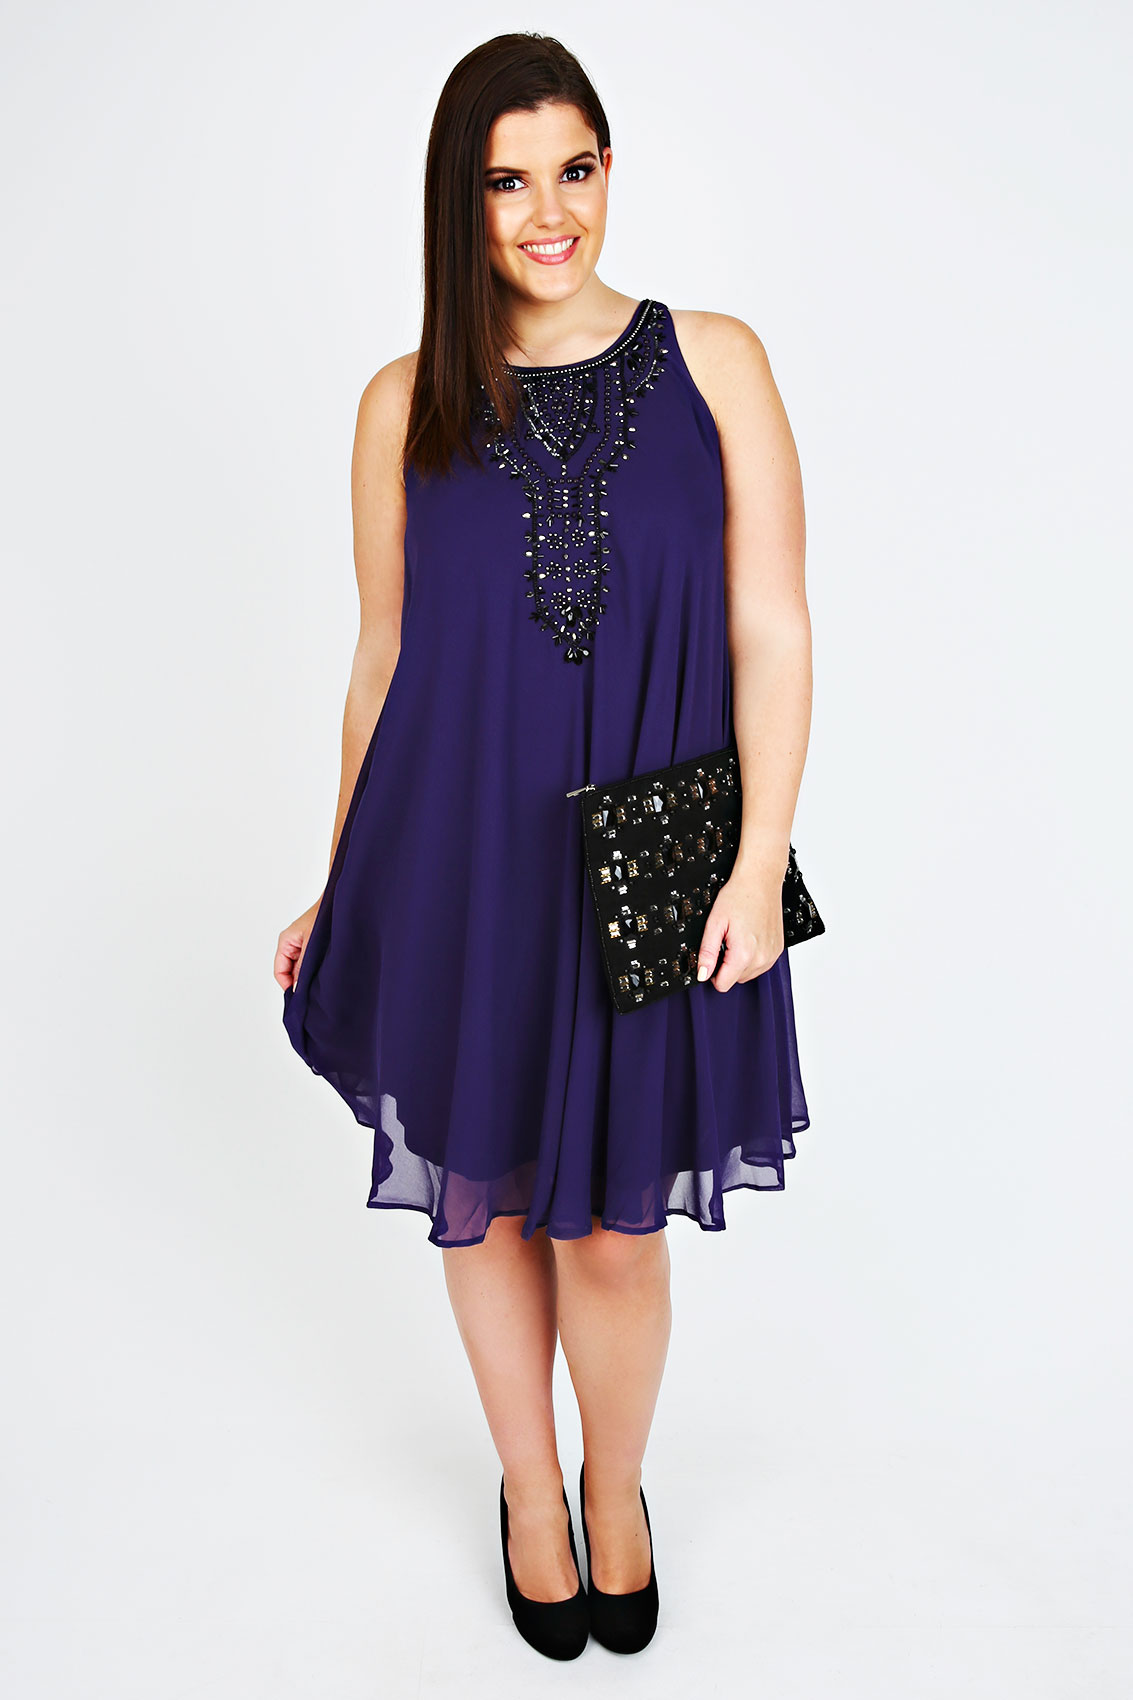 Purple Chiffon Sleeveless Swing Dress With Black Bead Embellishment